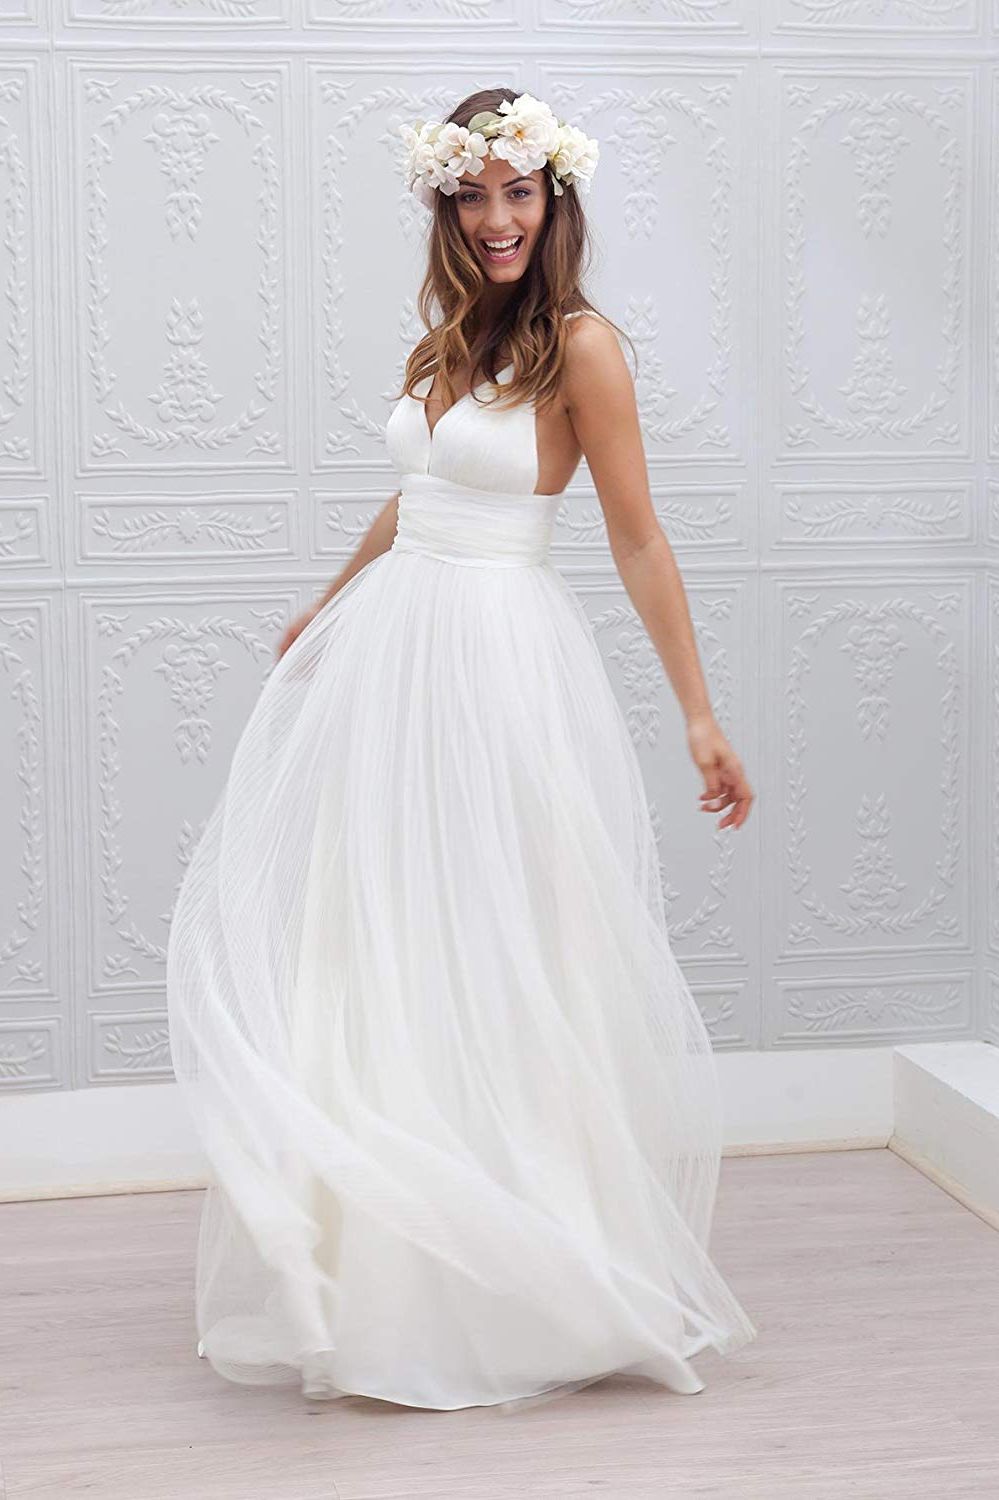 8 Amazon Wedding Dresses Under $150 2019